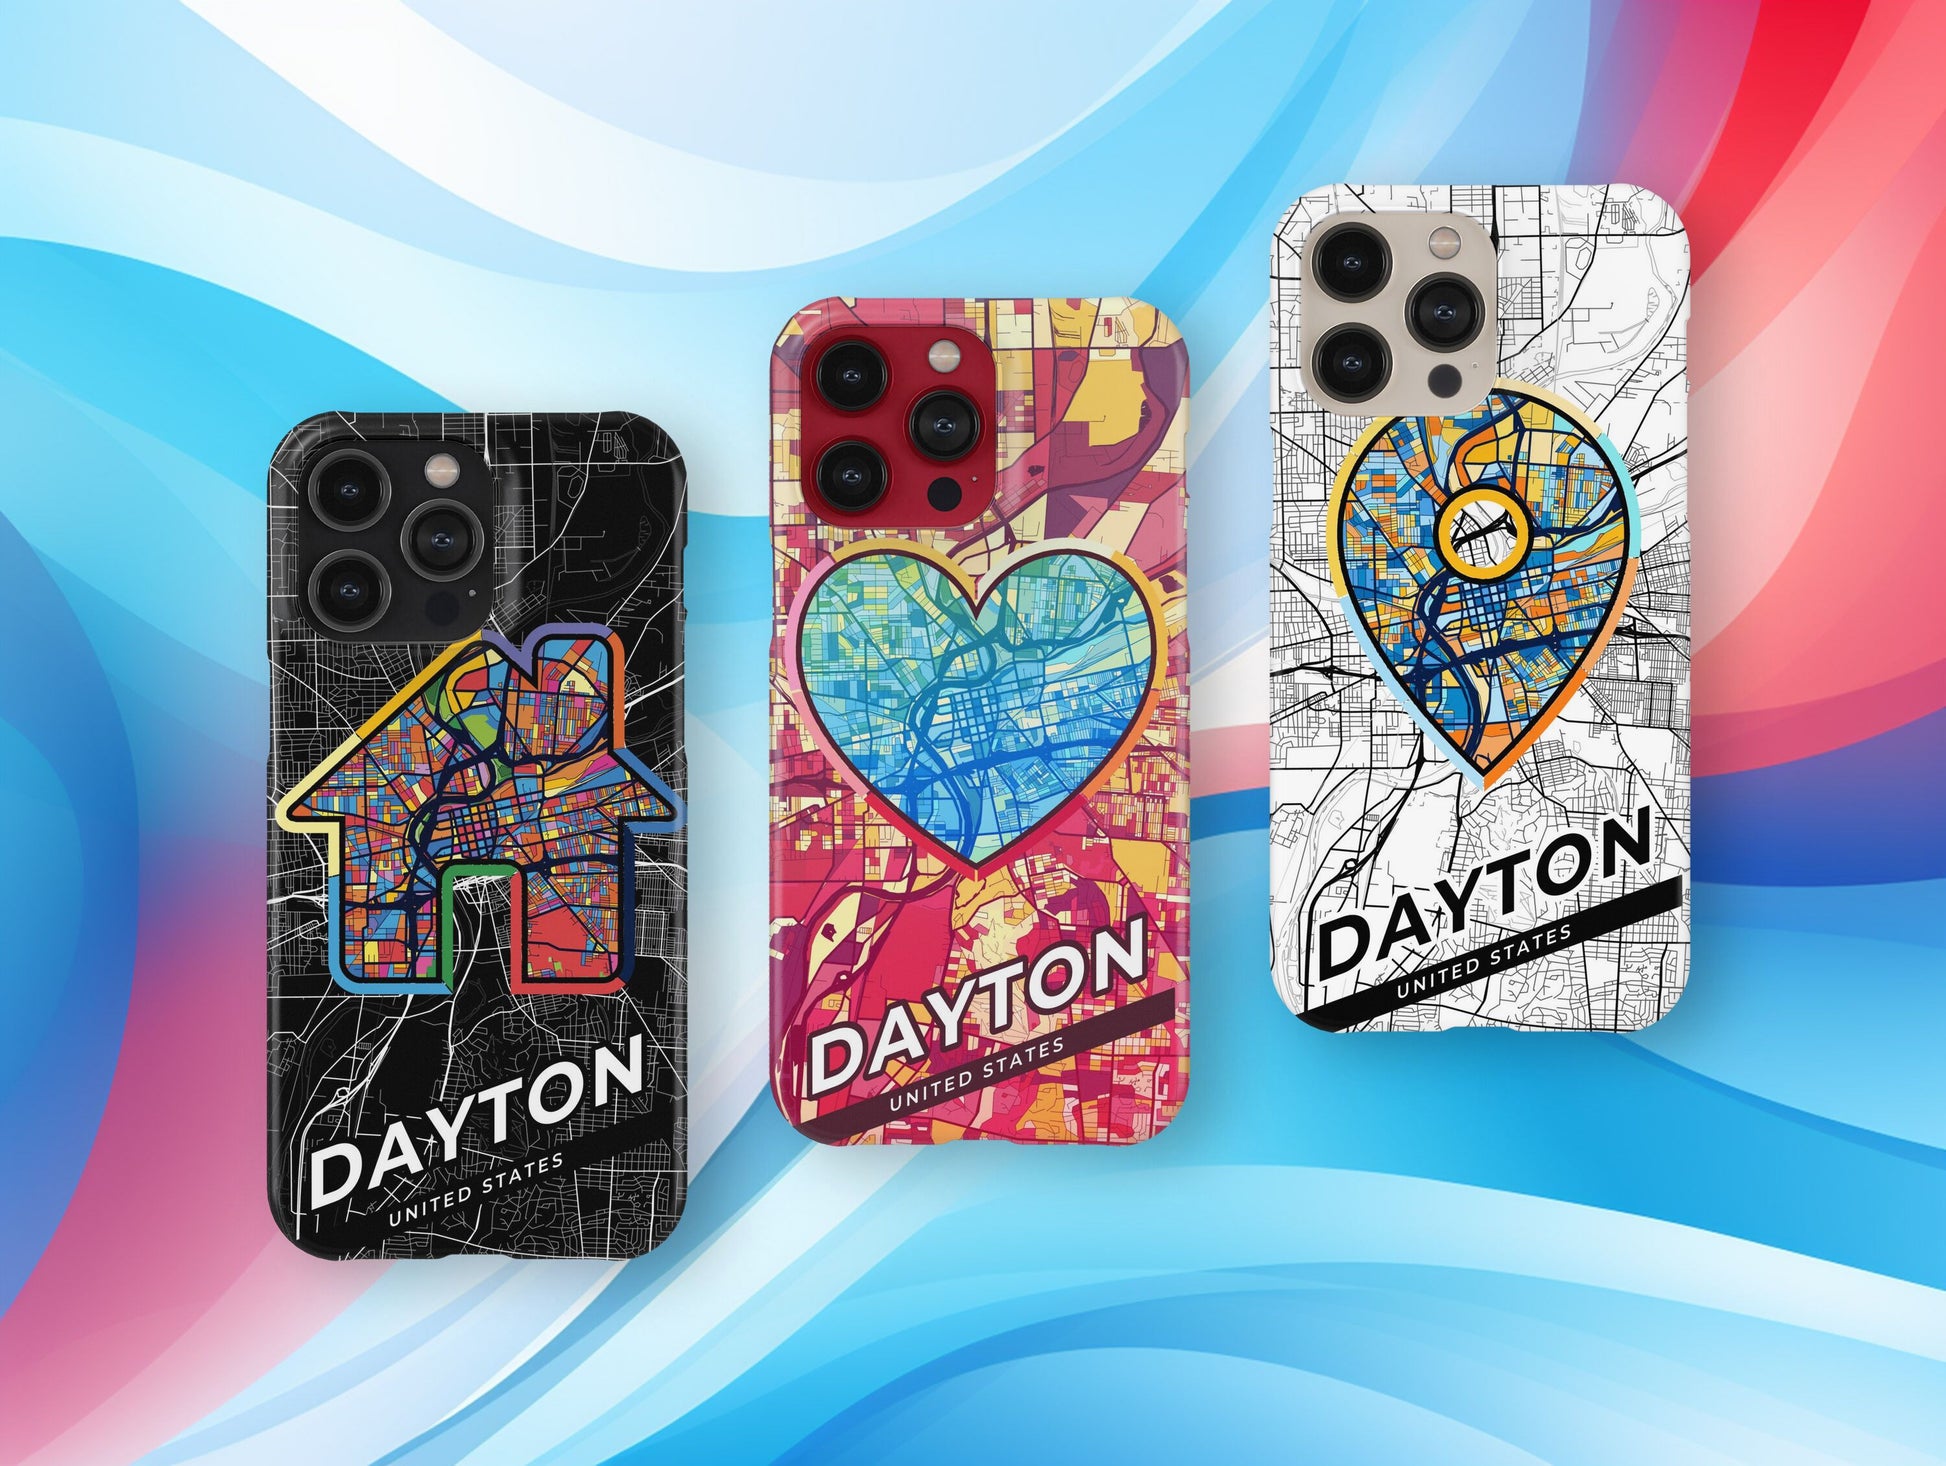 Dayton Ohio slim phone case with colorful icon. Birthday, wedding or housewarming gift. Couple match cases.